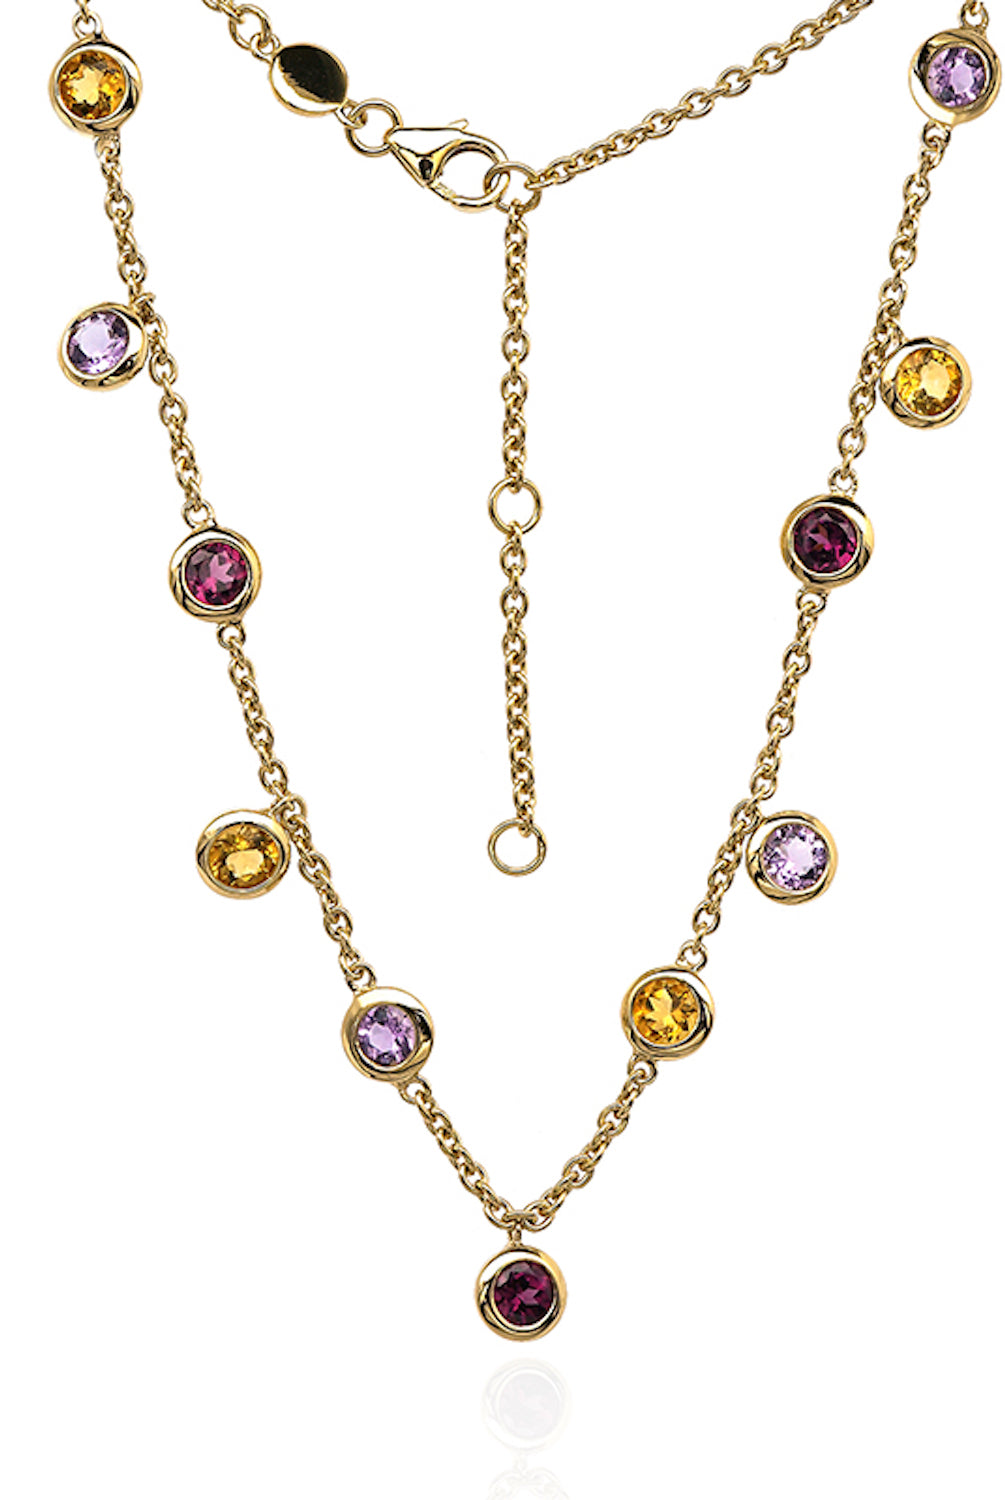 Gemstone charm necklace. Amethyst, citrine and garnet necklace.